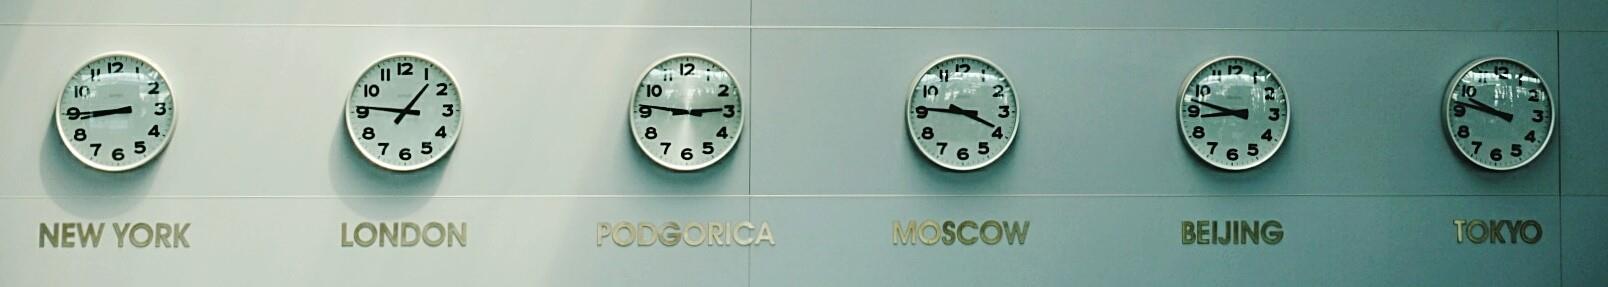 networking-world-clocks